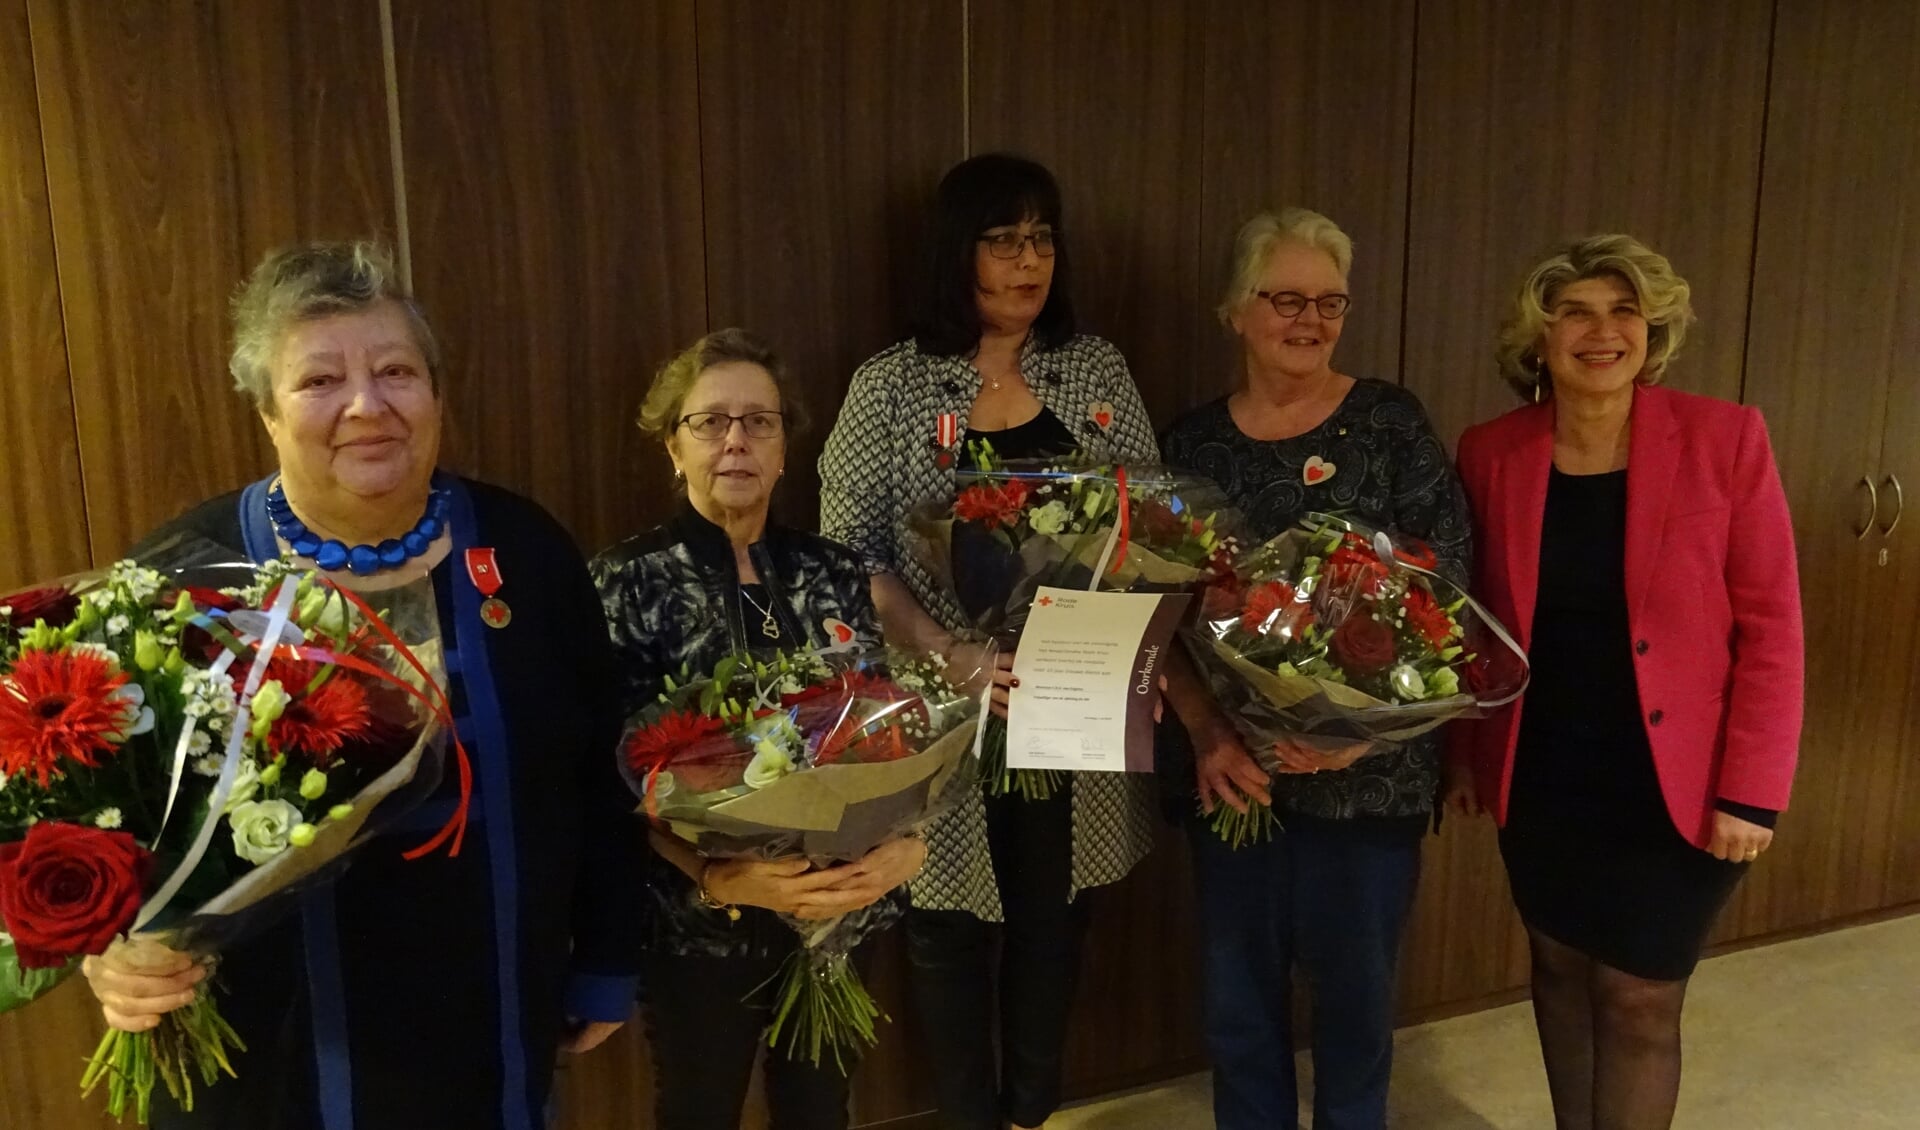 Vier jubilarissen gehuldigd voor jaren van betrokkenheid bij het Rode Kruis. V.l.n.r.: Kathy Hamster, Marja van Brakel, Cindy van Engelen en Ineke Princen naast wethouder Madeleine Bakker.